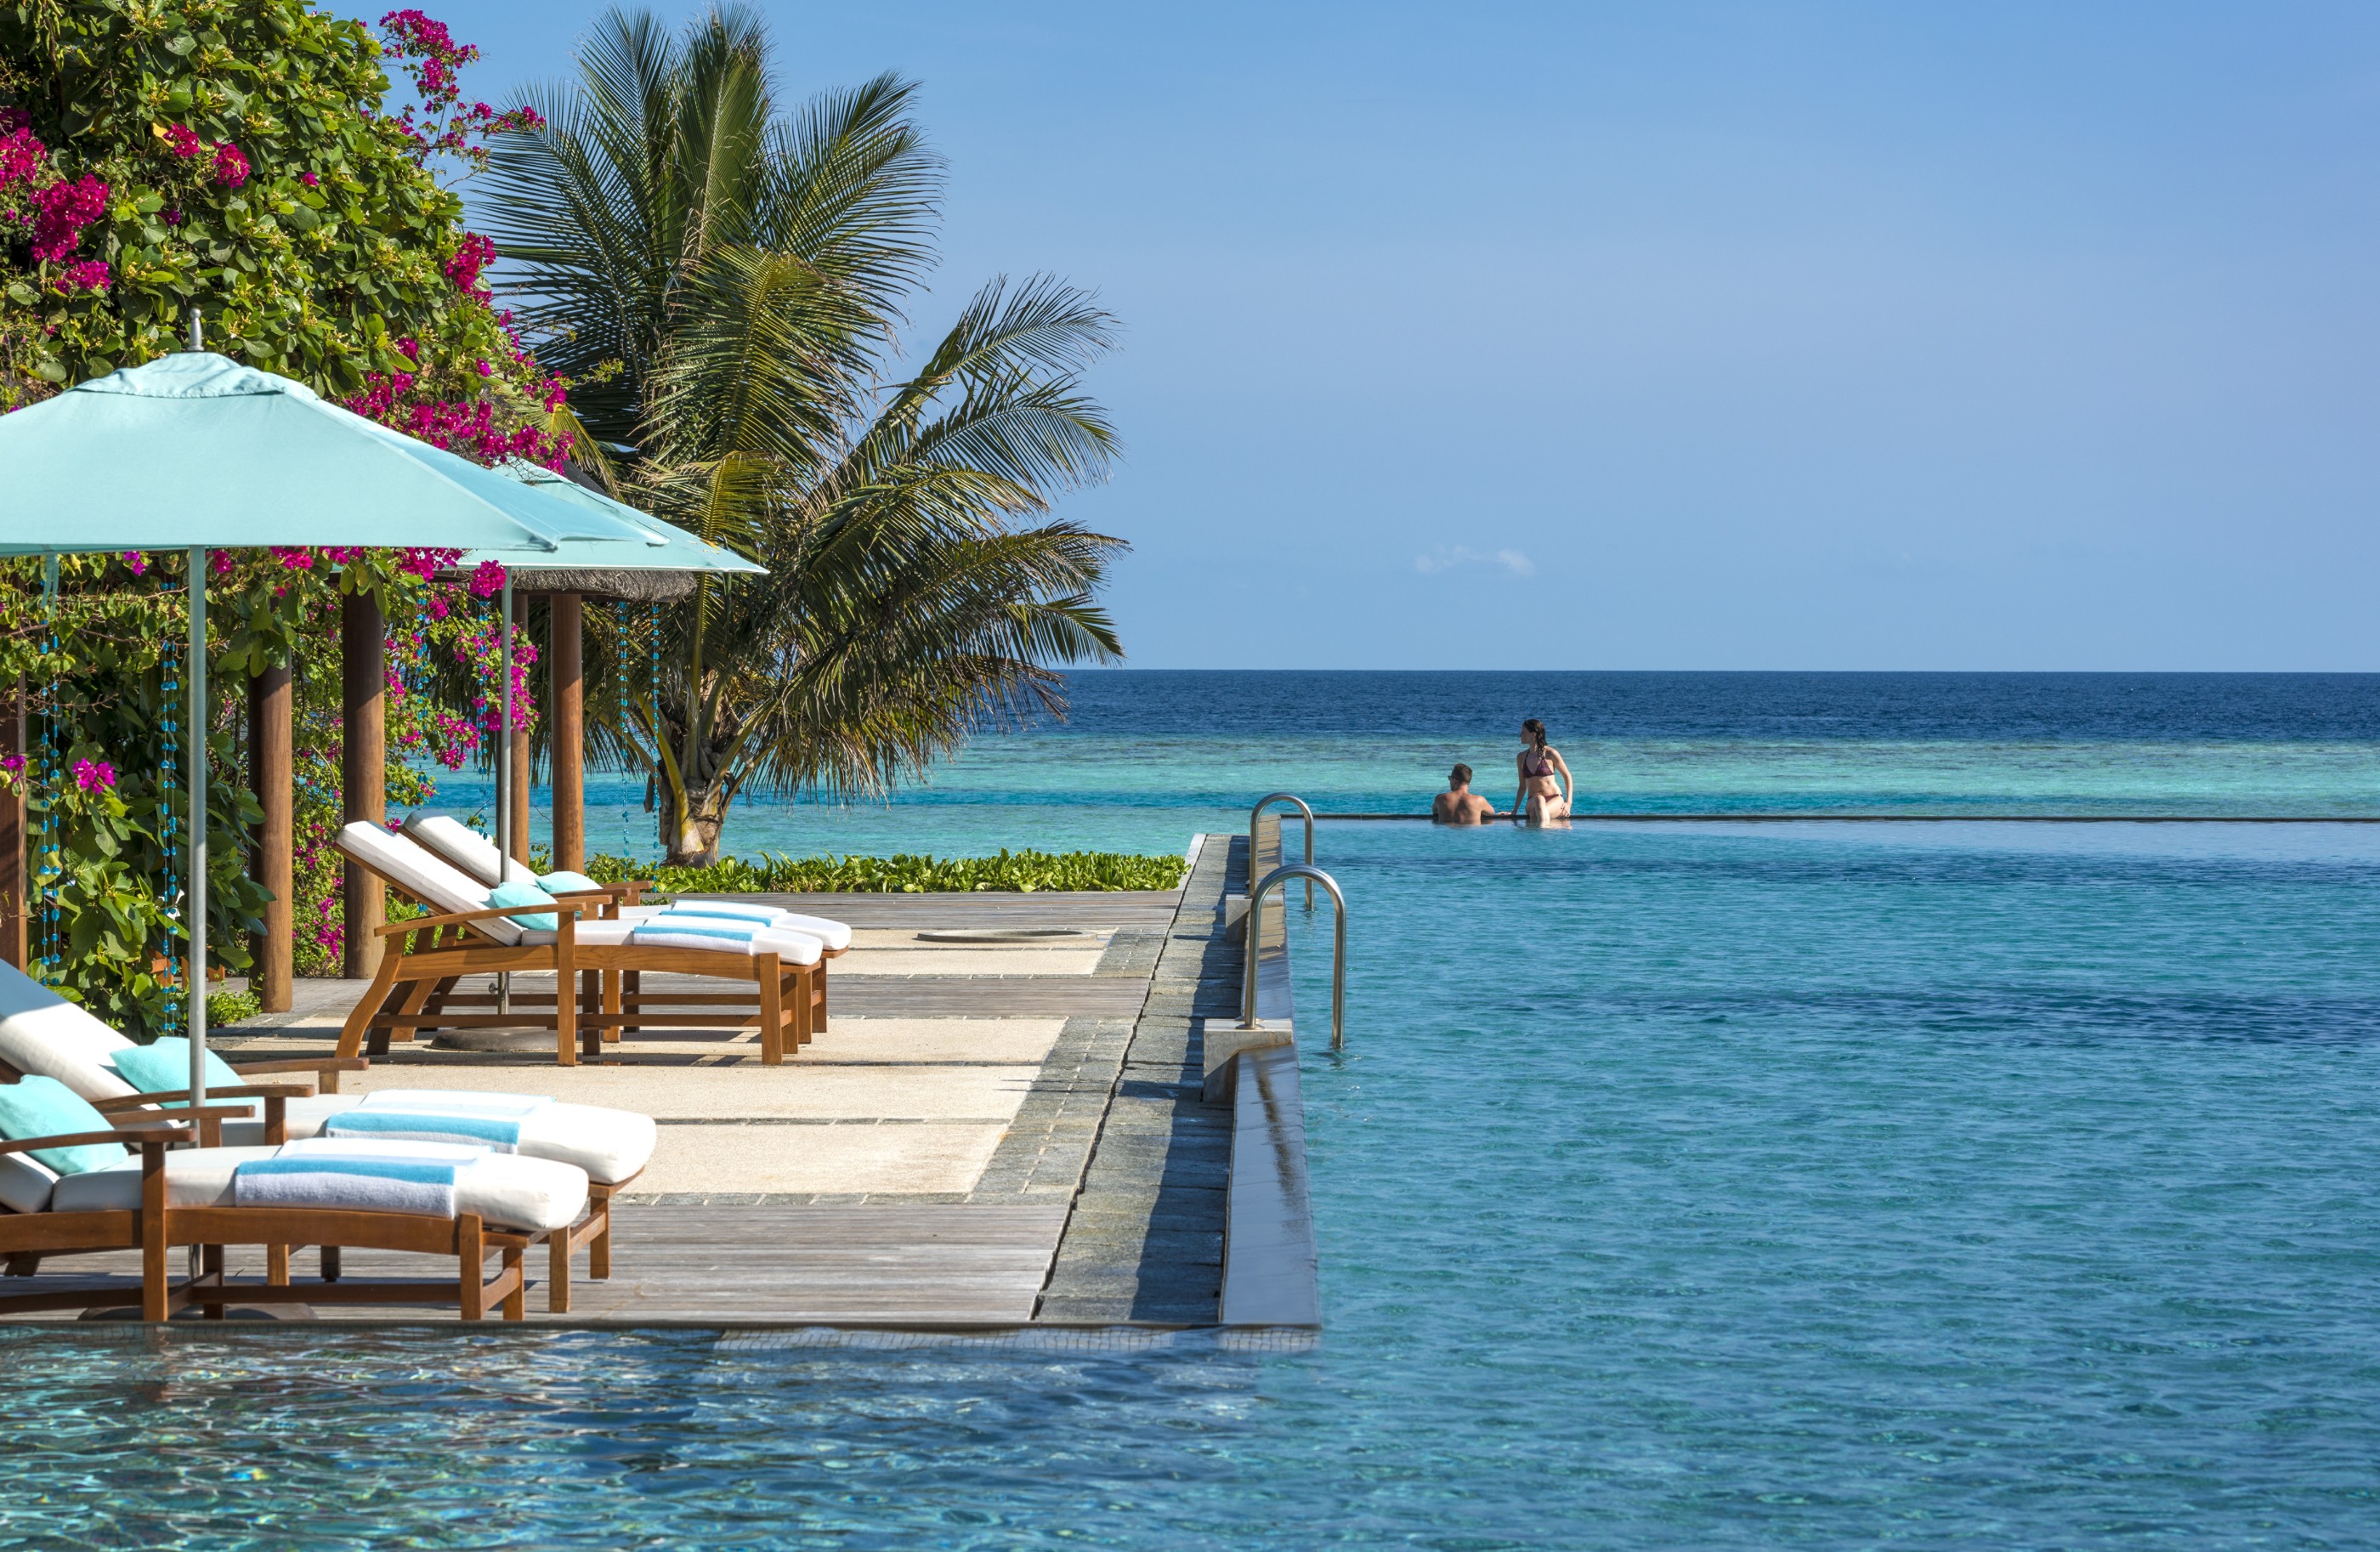 The infinity pool of Four Seasons Landaa Giraavaru, Maldives